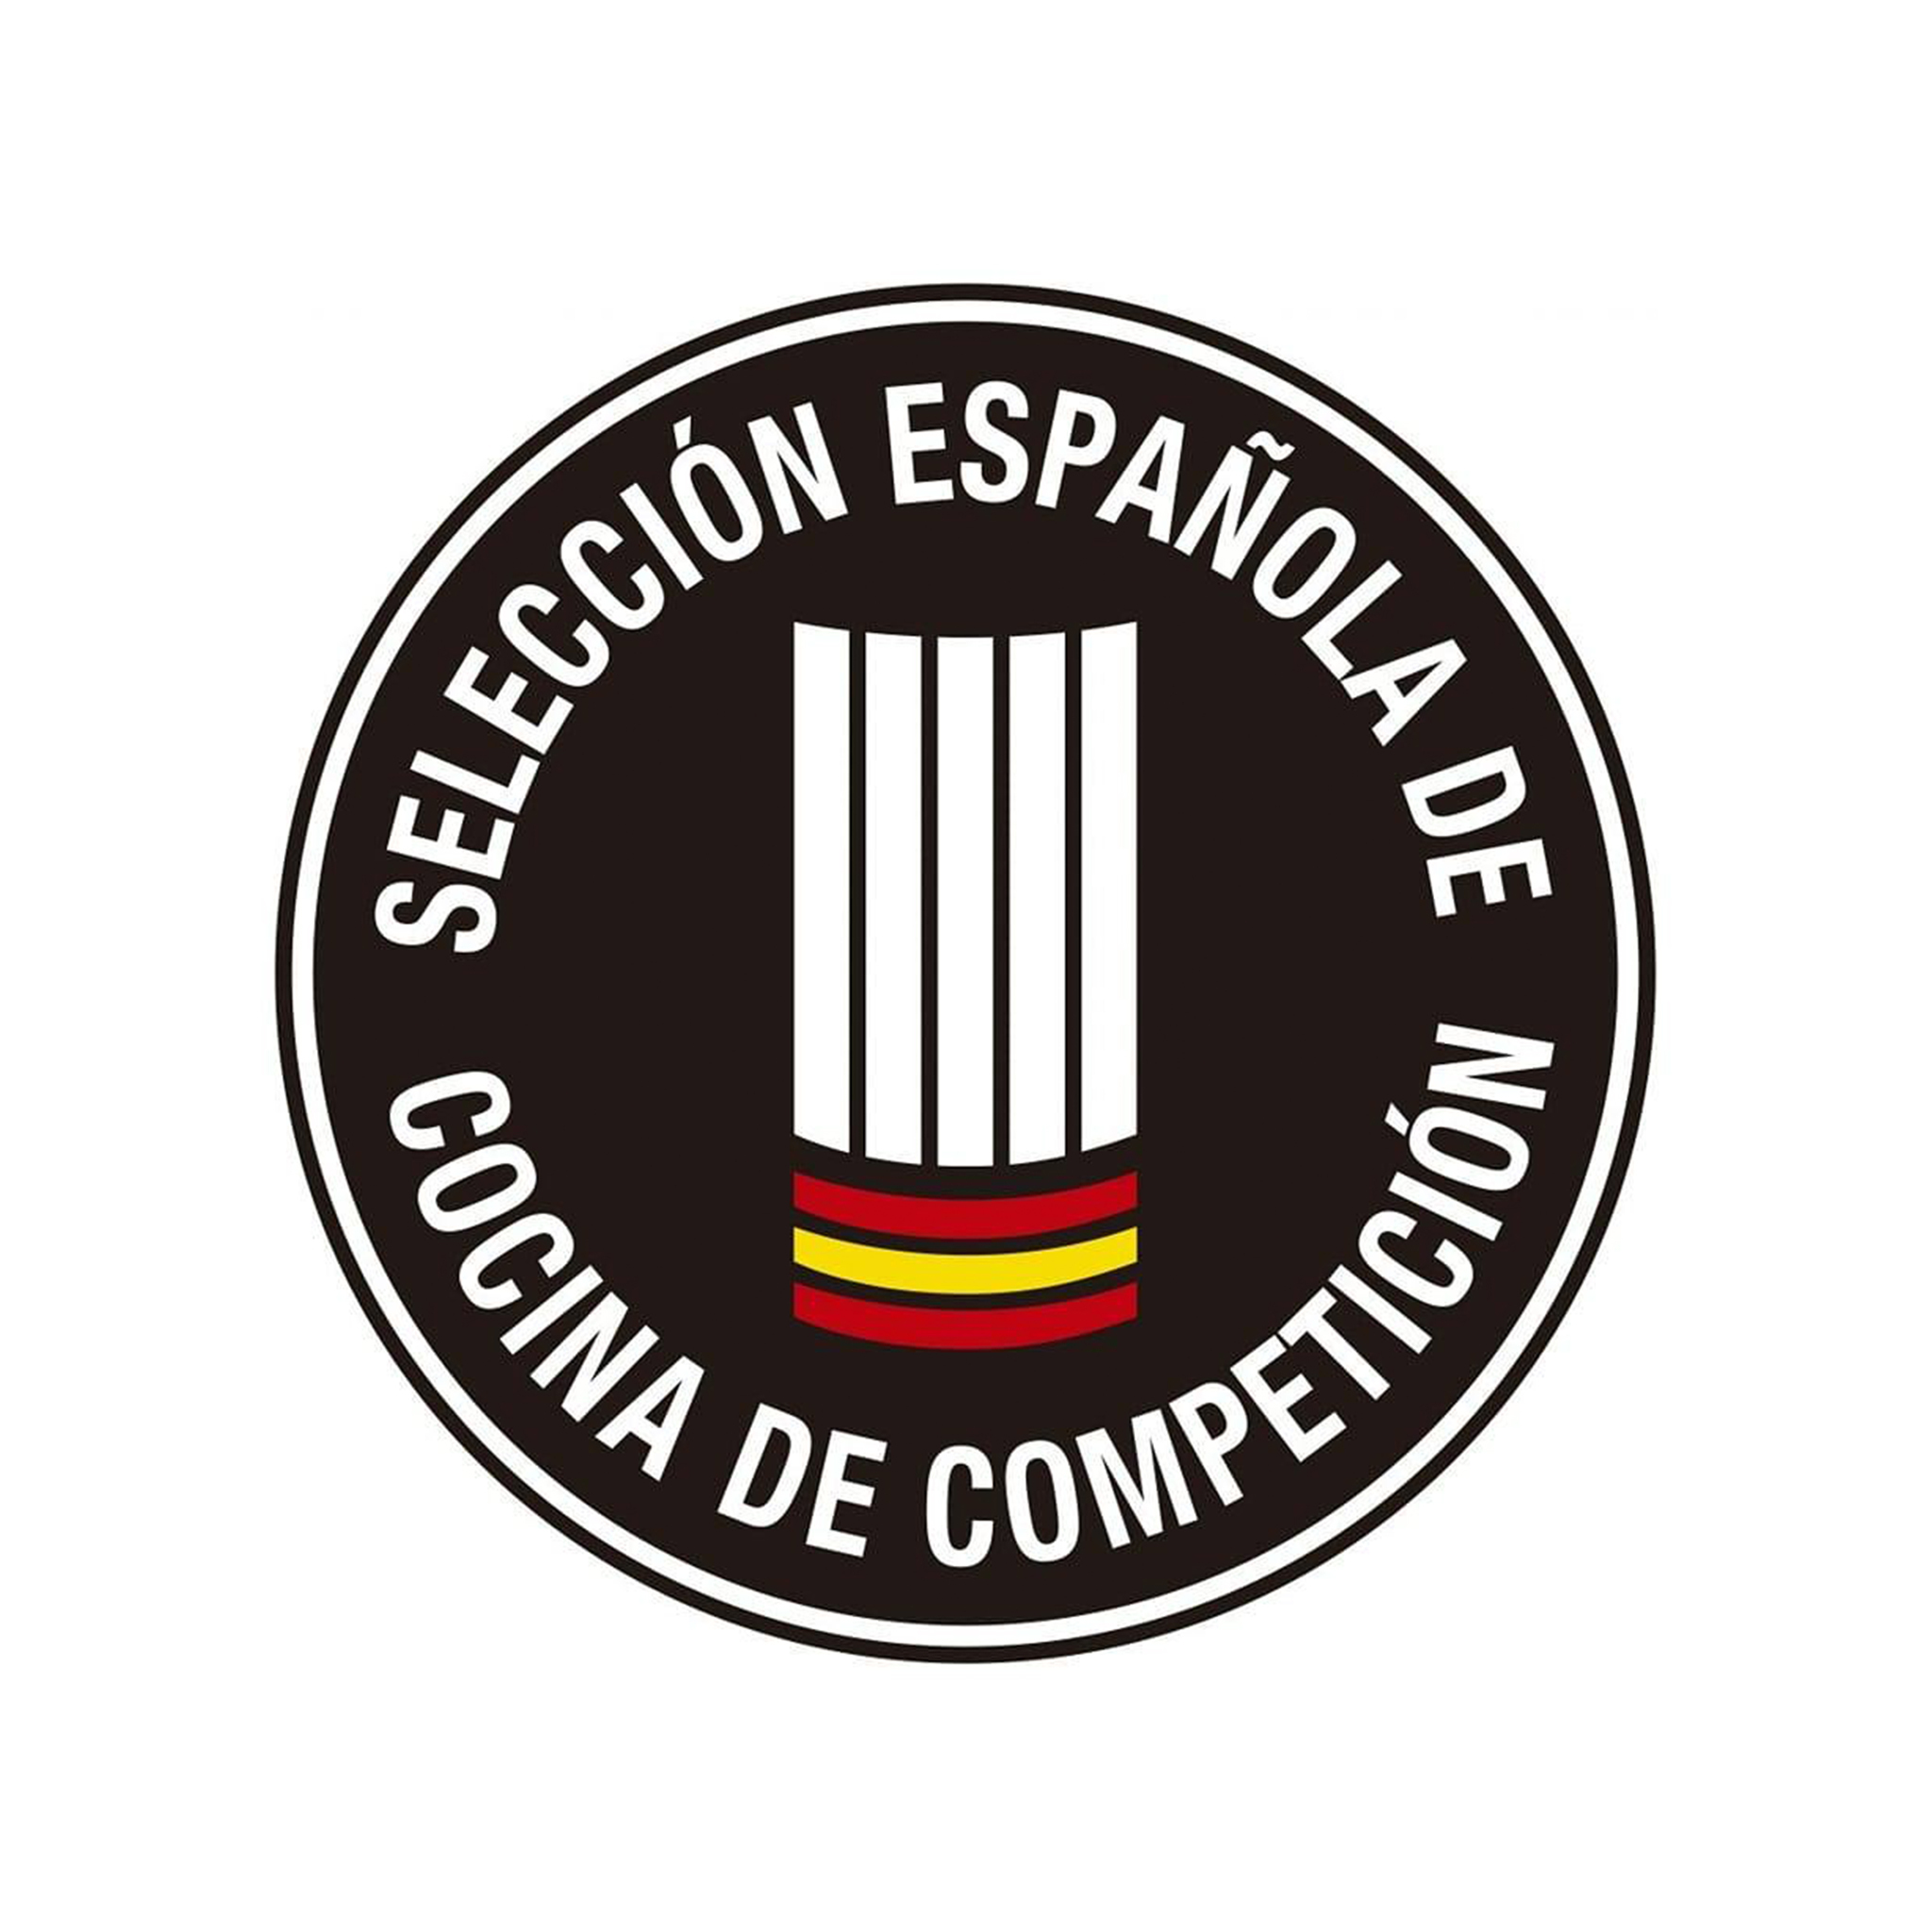 SELECCION_ESPANOLA_DE_COCINA_DE_COMPETICION